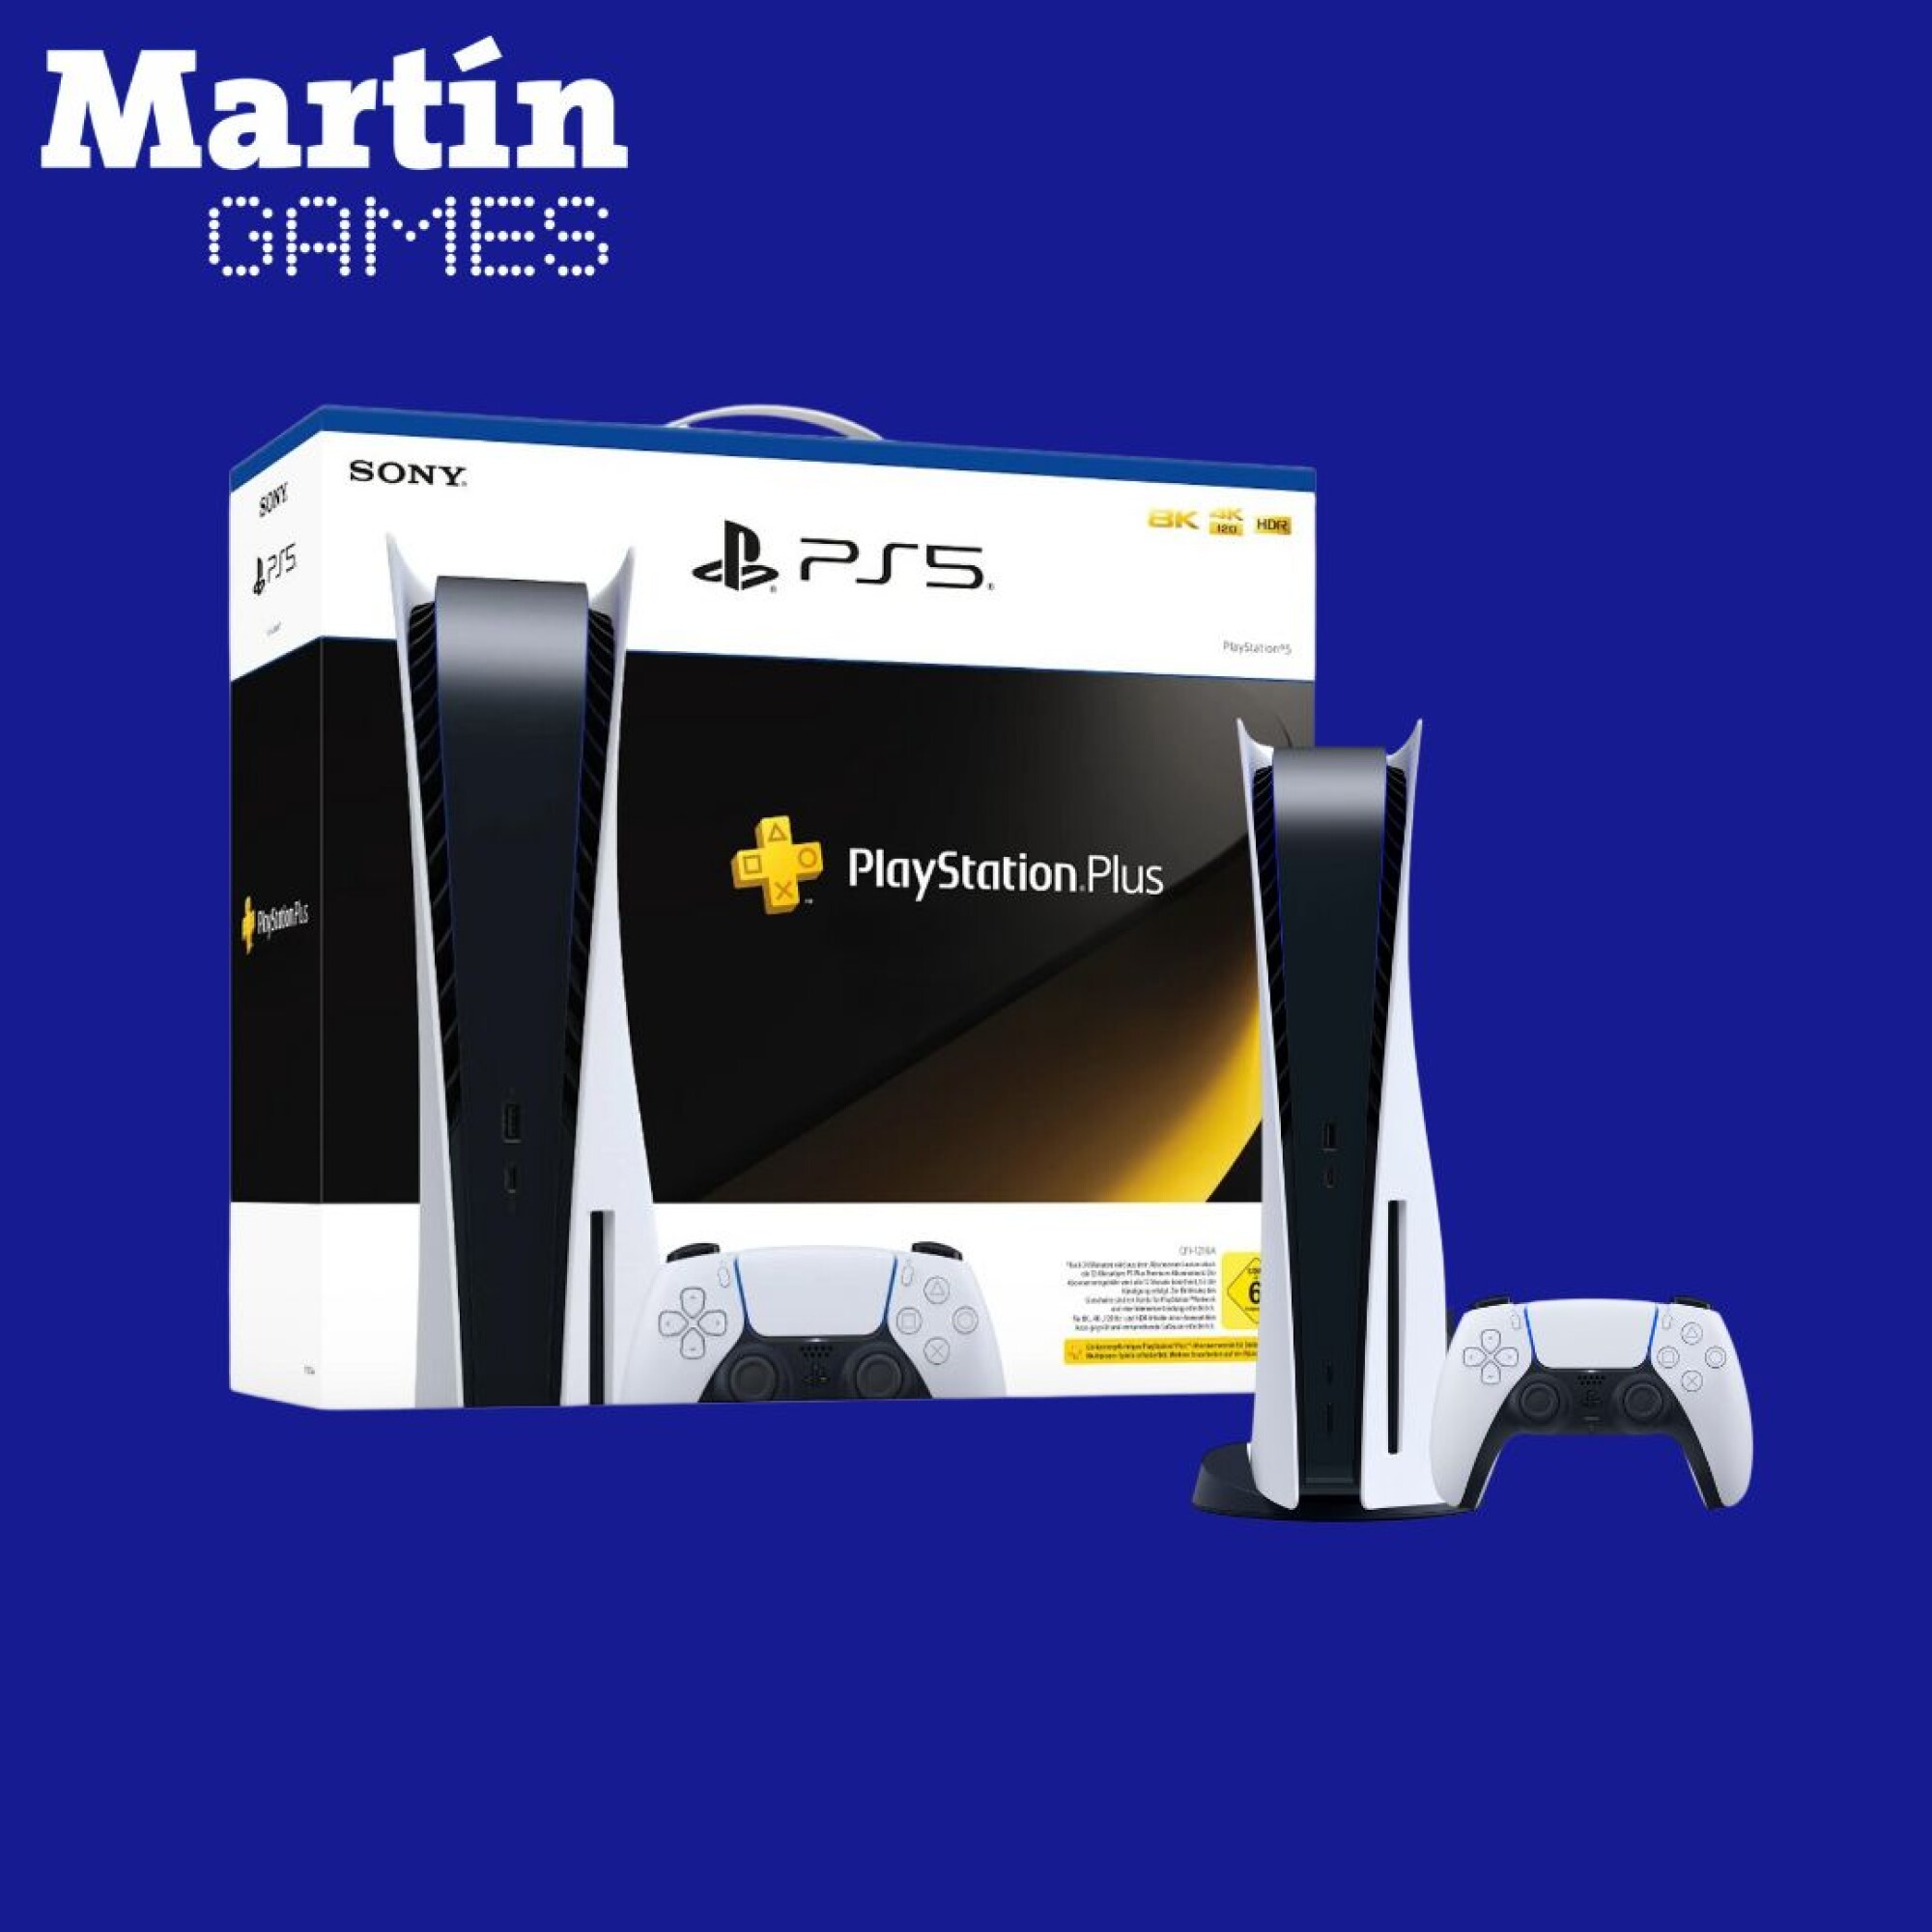 PS5 DIGITAL 0KM + HORIZON FORBIDDEN WEST — Martín Games